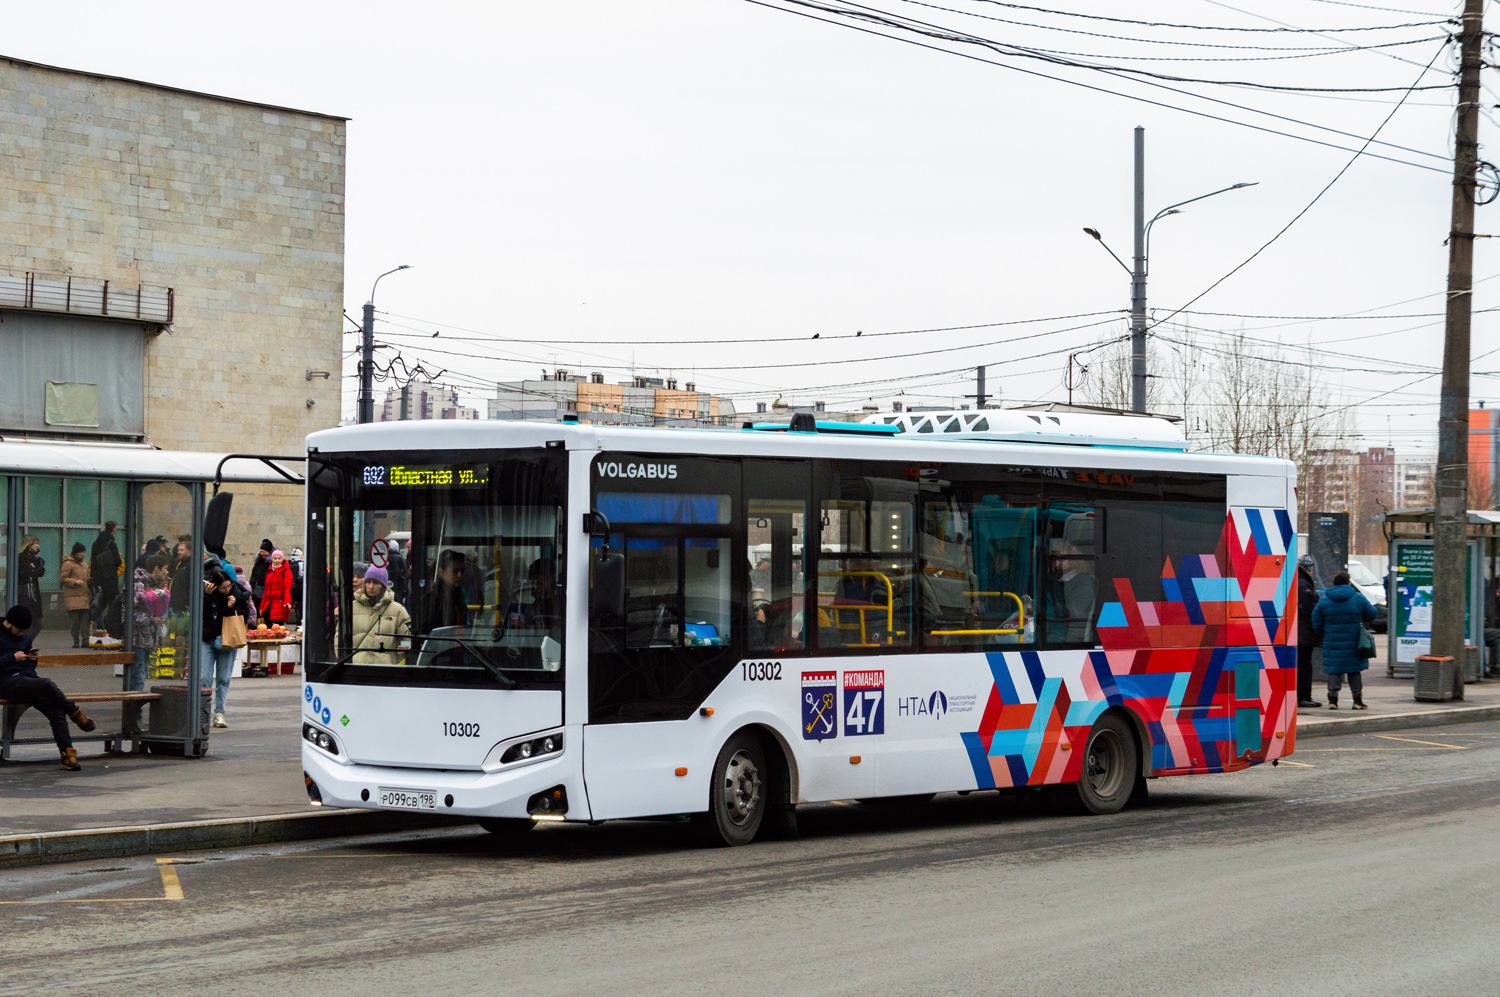 Saint Petersburg, Volgabus-4298.G4 (LNG) # 10302